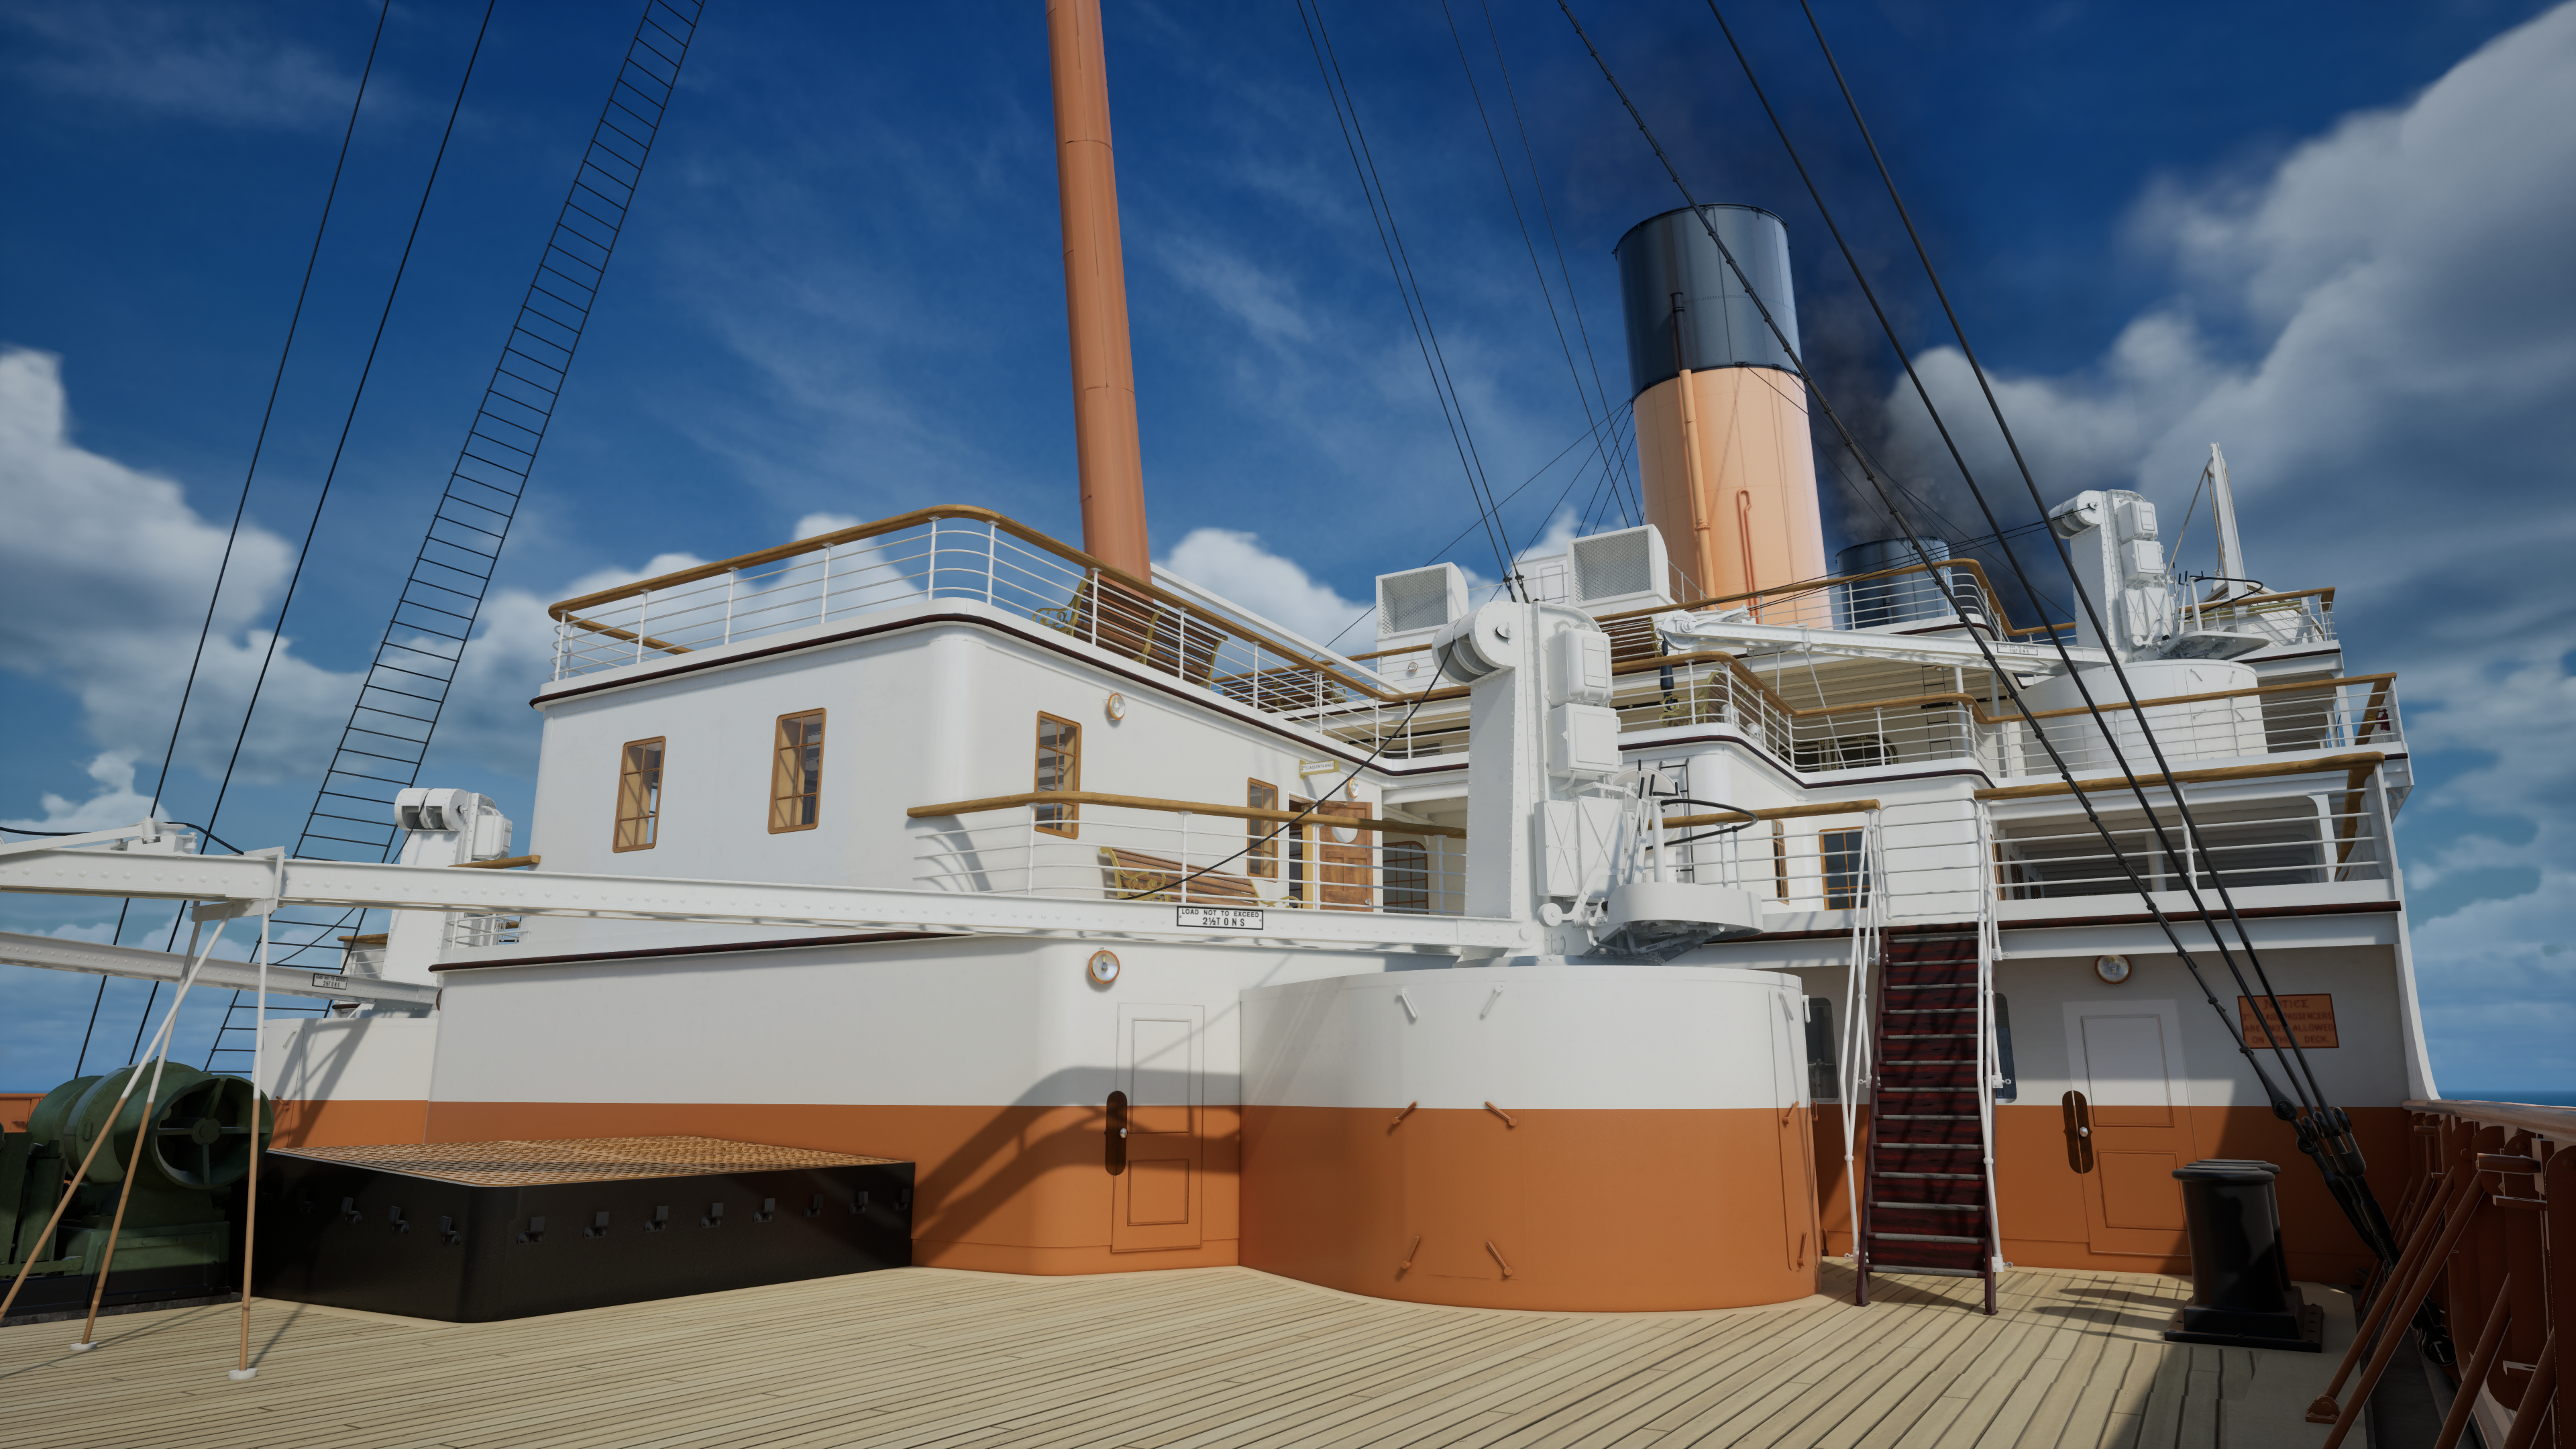 General 3840x2160 Nvidia RTX Titanic CGI digital art ship sky clouds stairs smoke